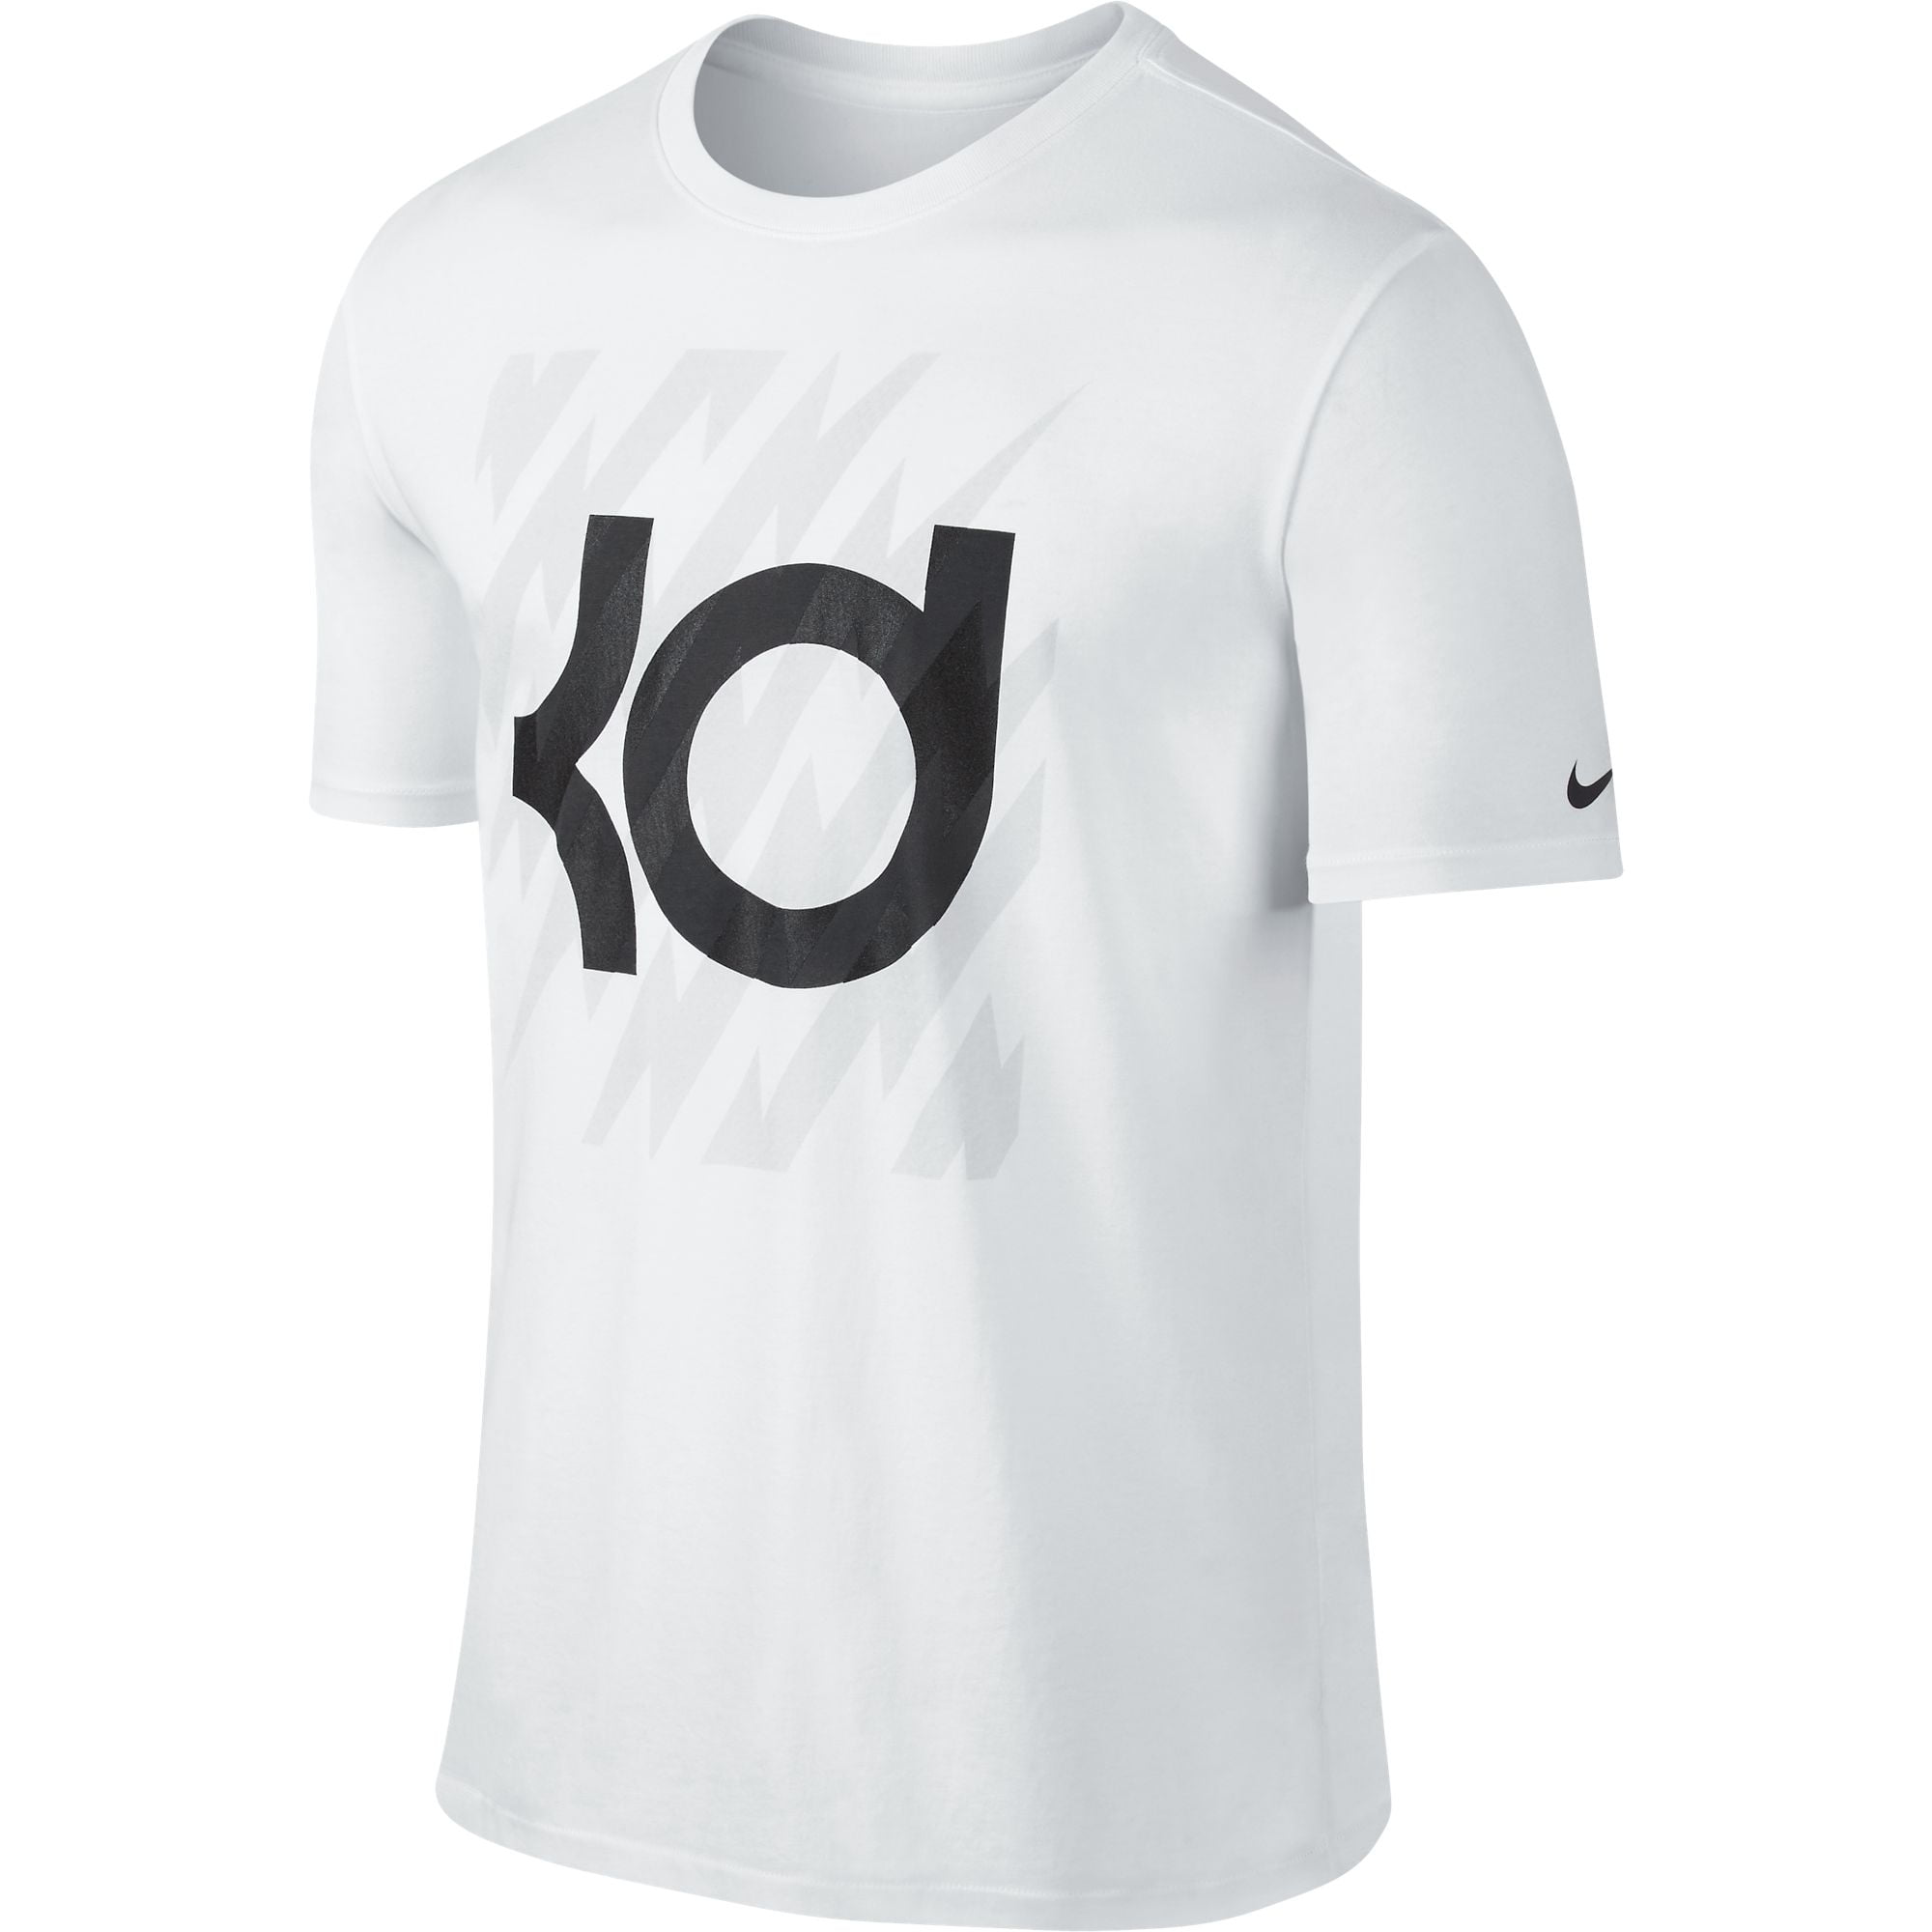 Nike KD Kevin Durant Hot Box Men's T-Shirt White/Black/Grey 689025-100 ...